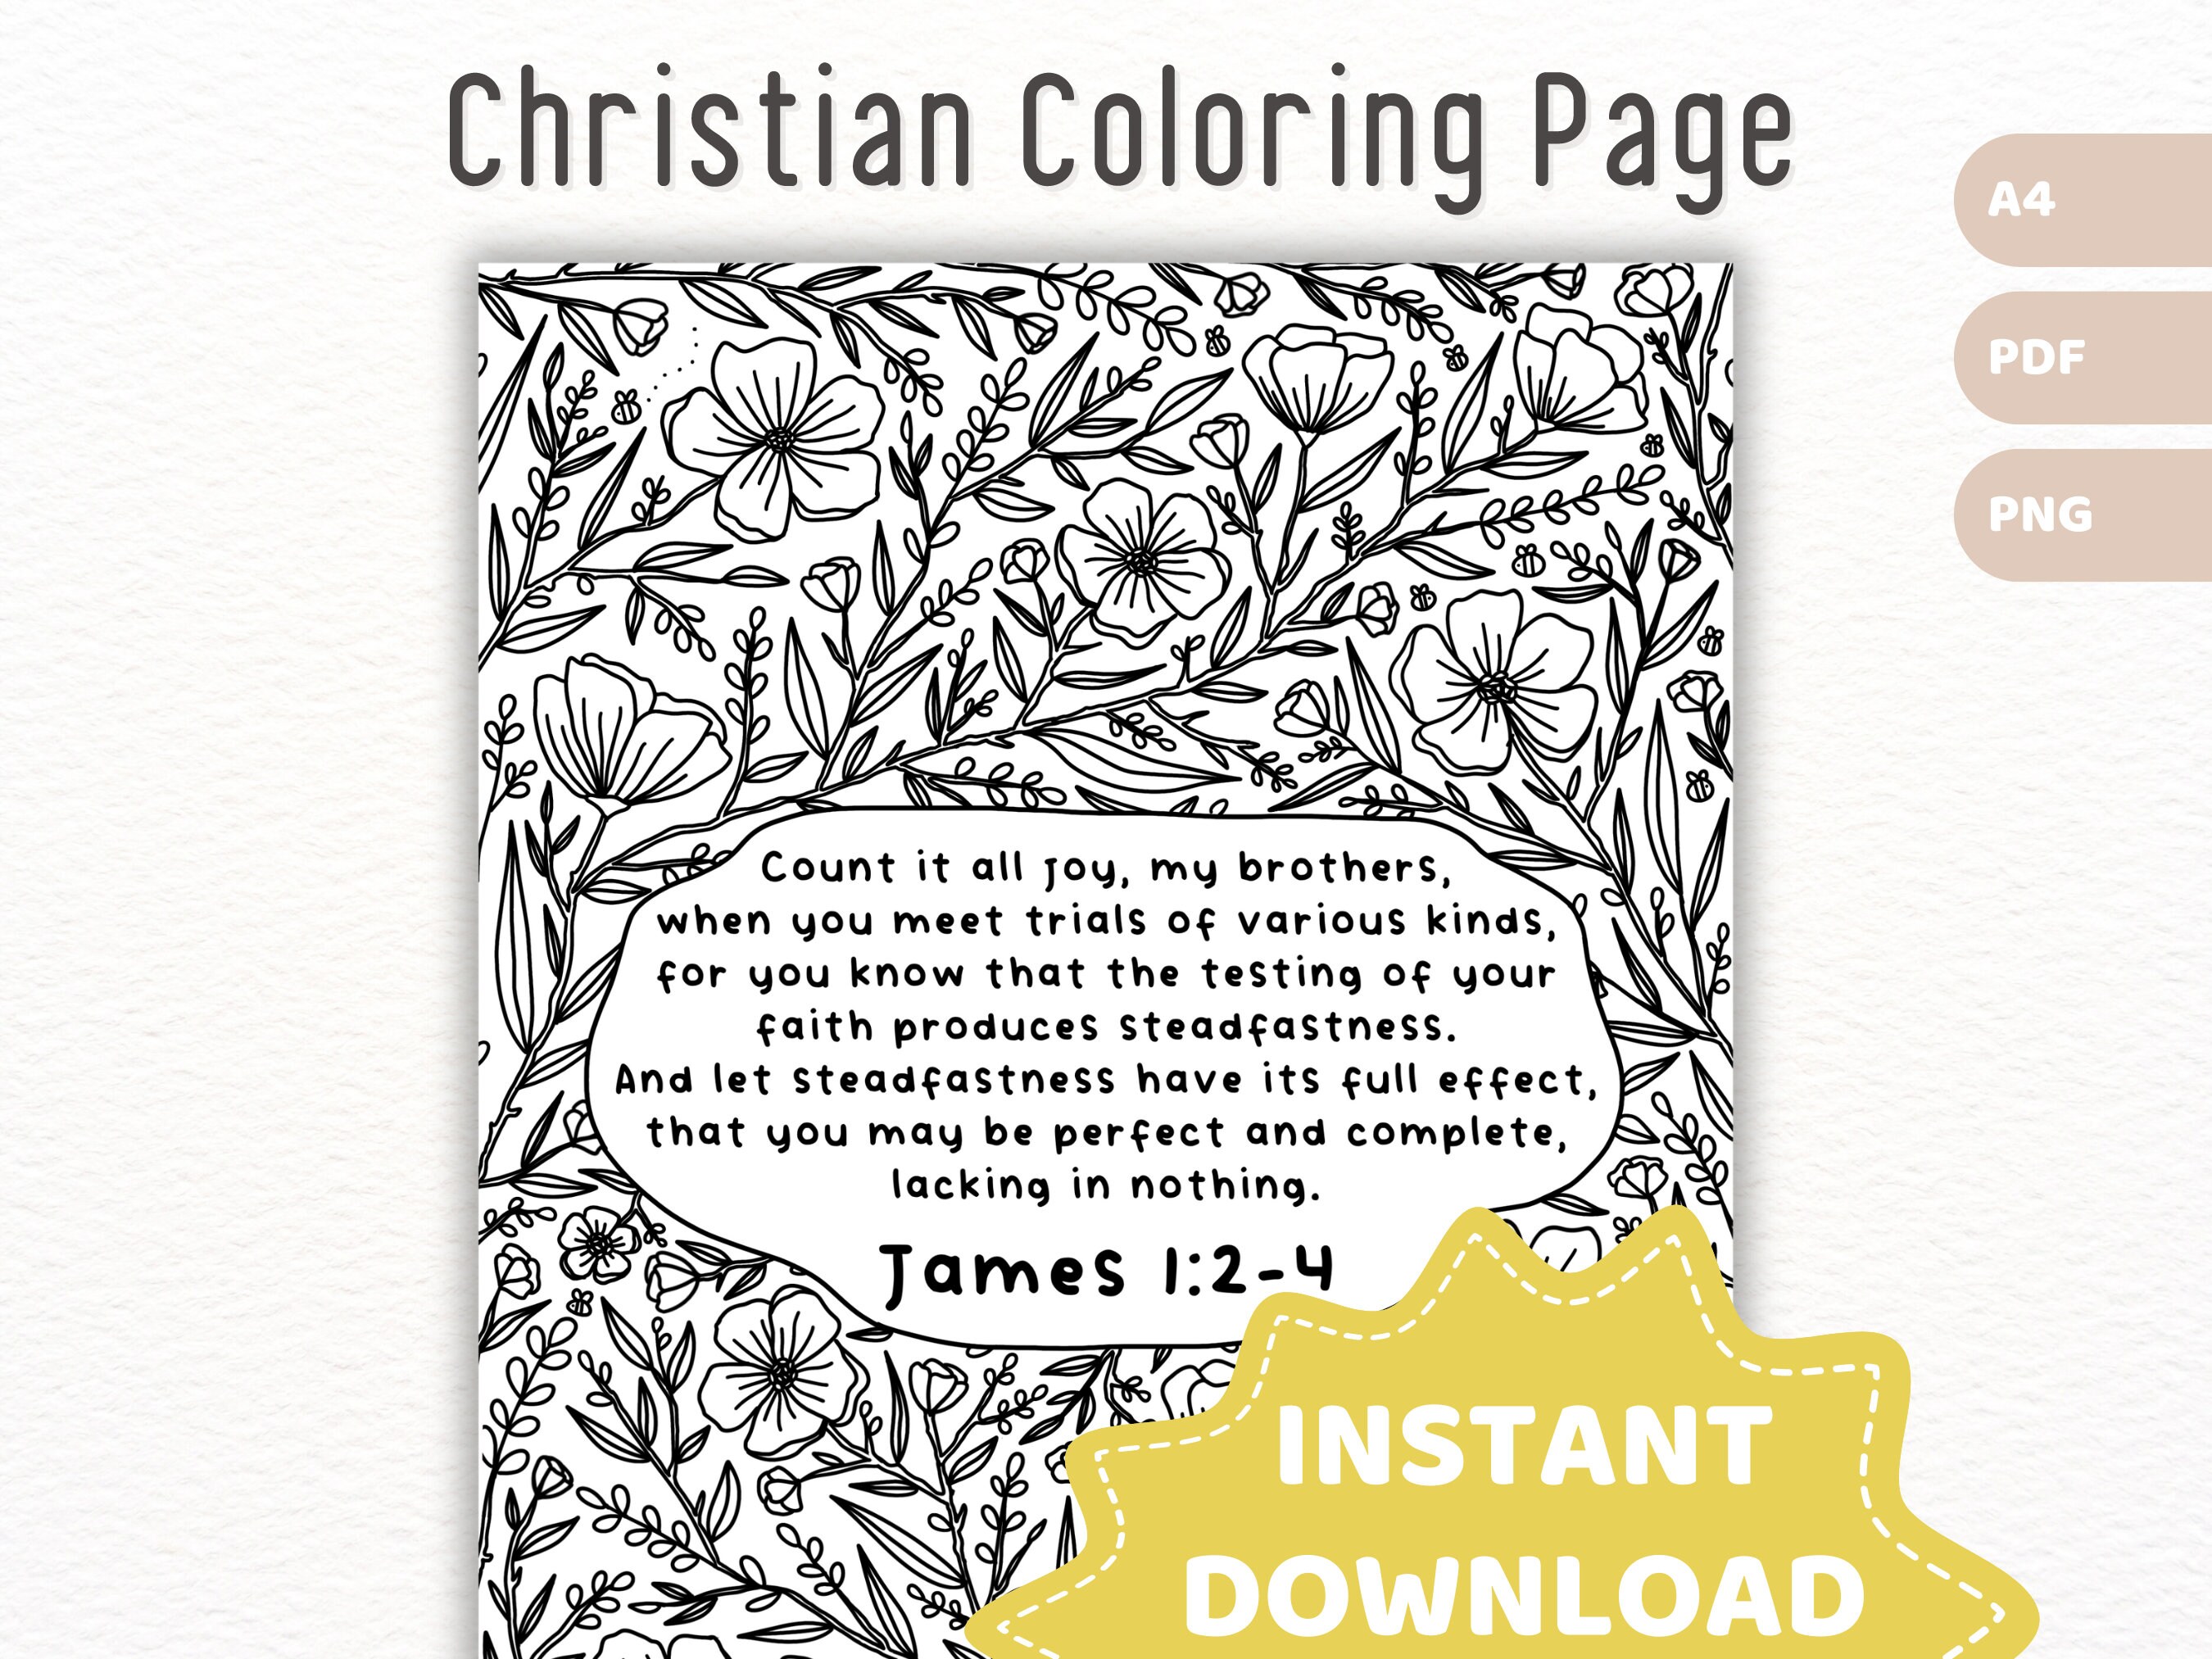 20 LeBron James Coloring Pages (Free PDF Printables)